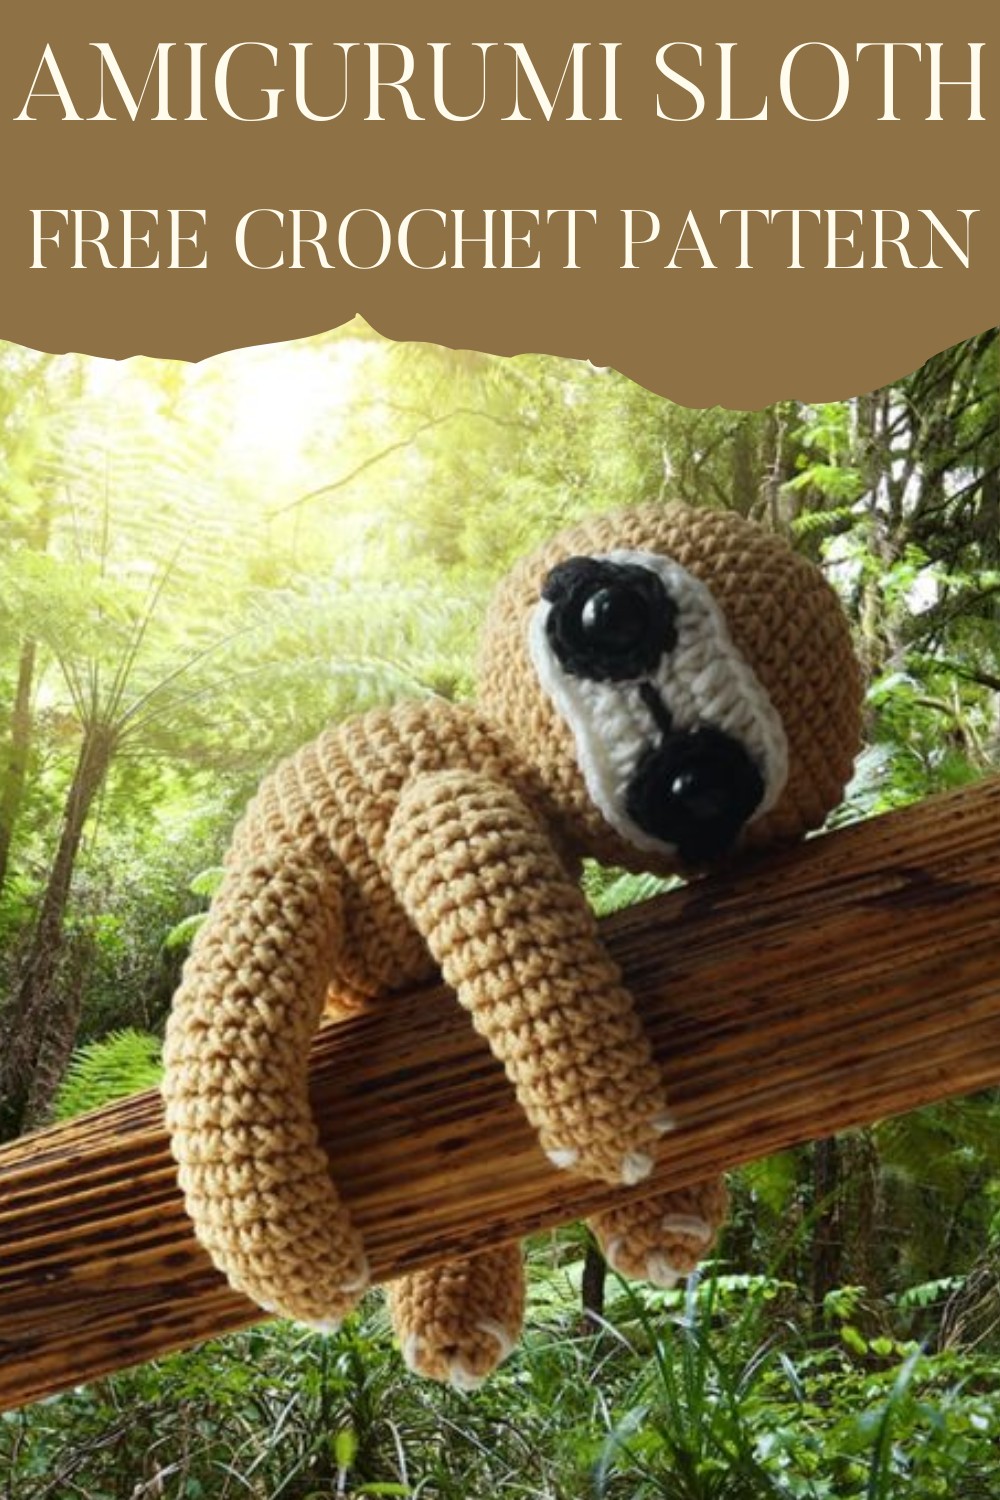 Amigurumi Sloth Free Crochet Pattern